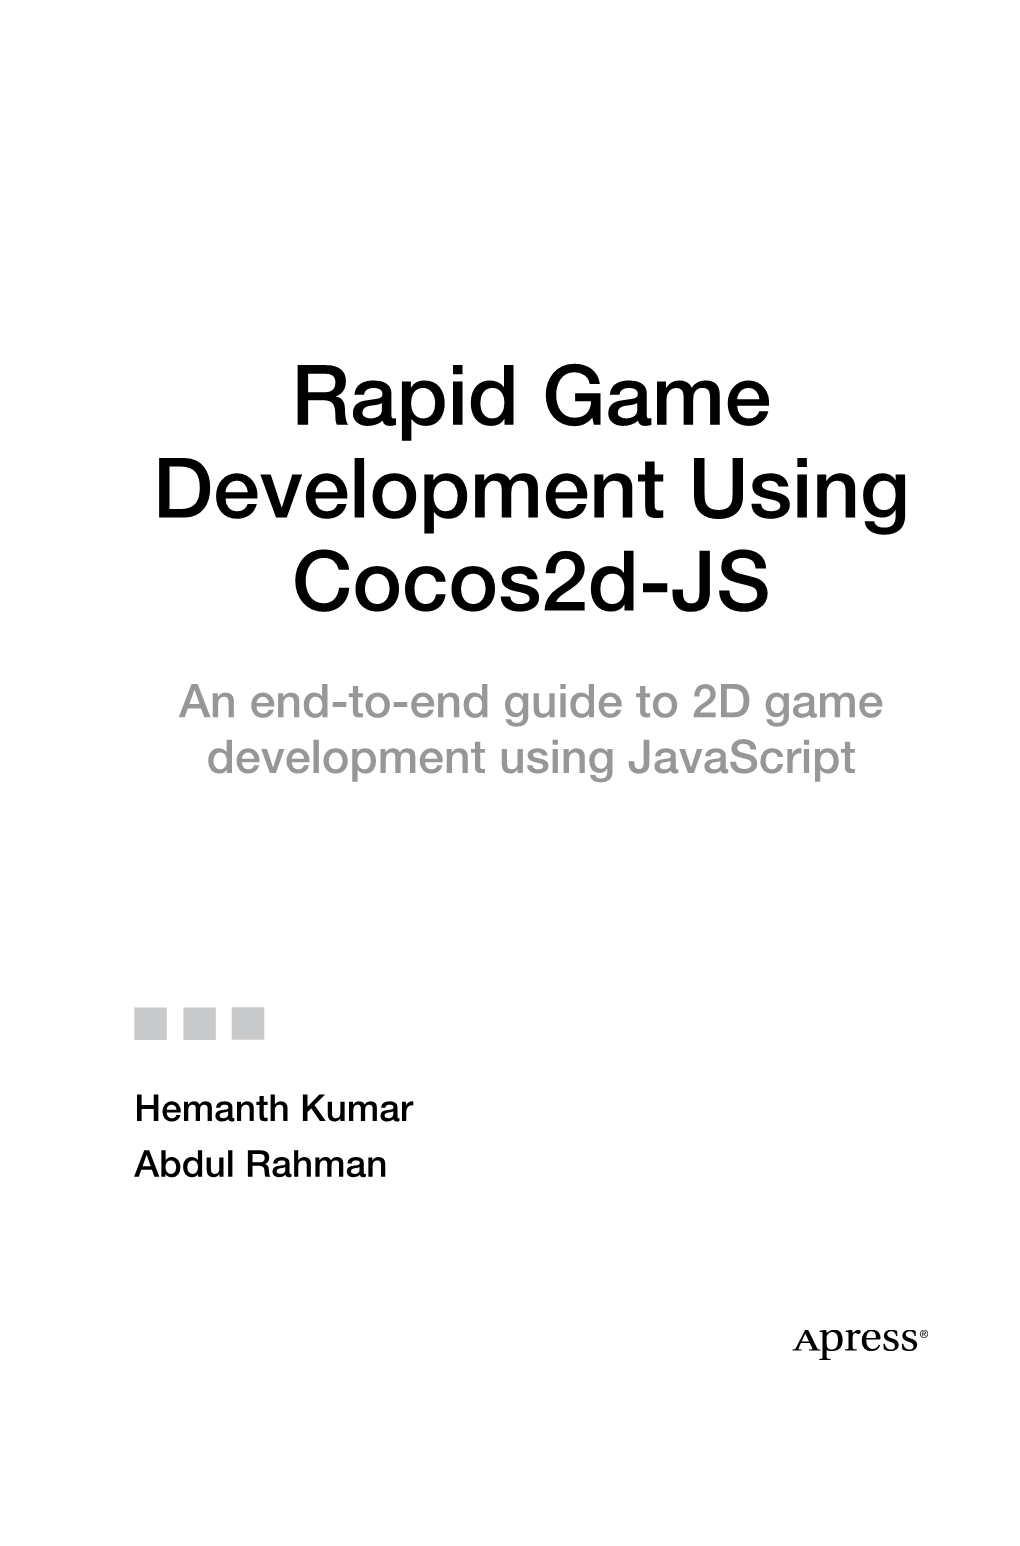 Rapid Game Development Using Cocos2d-JS